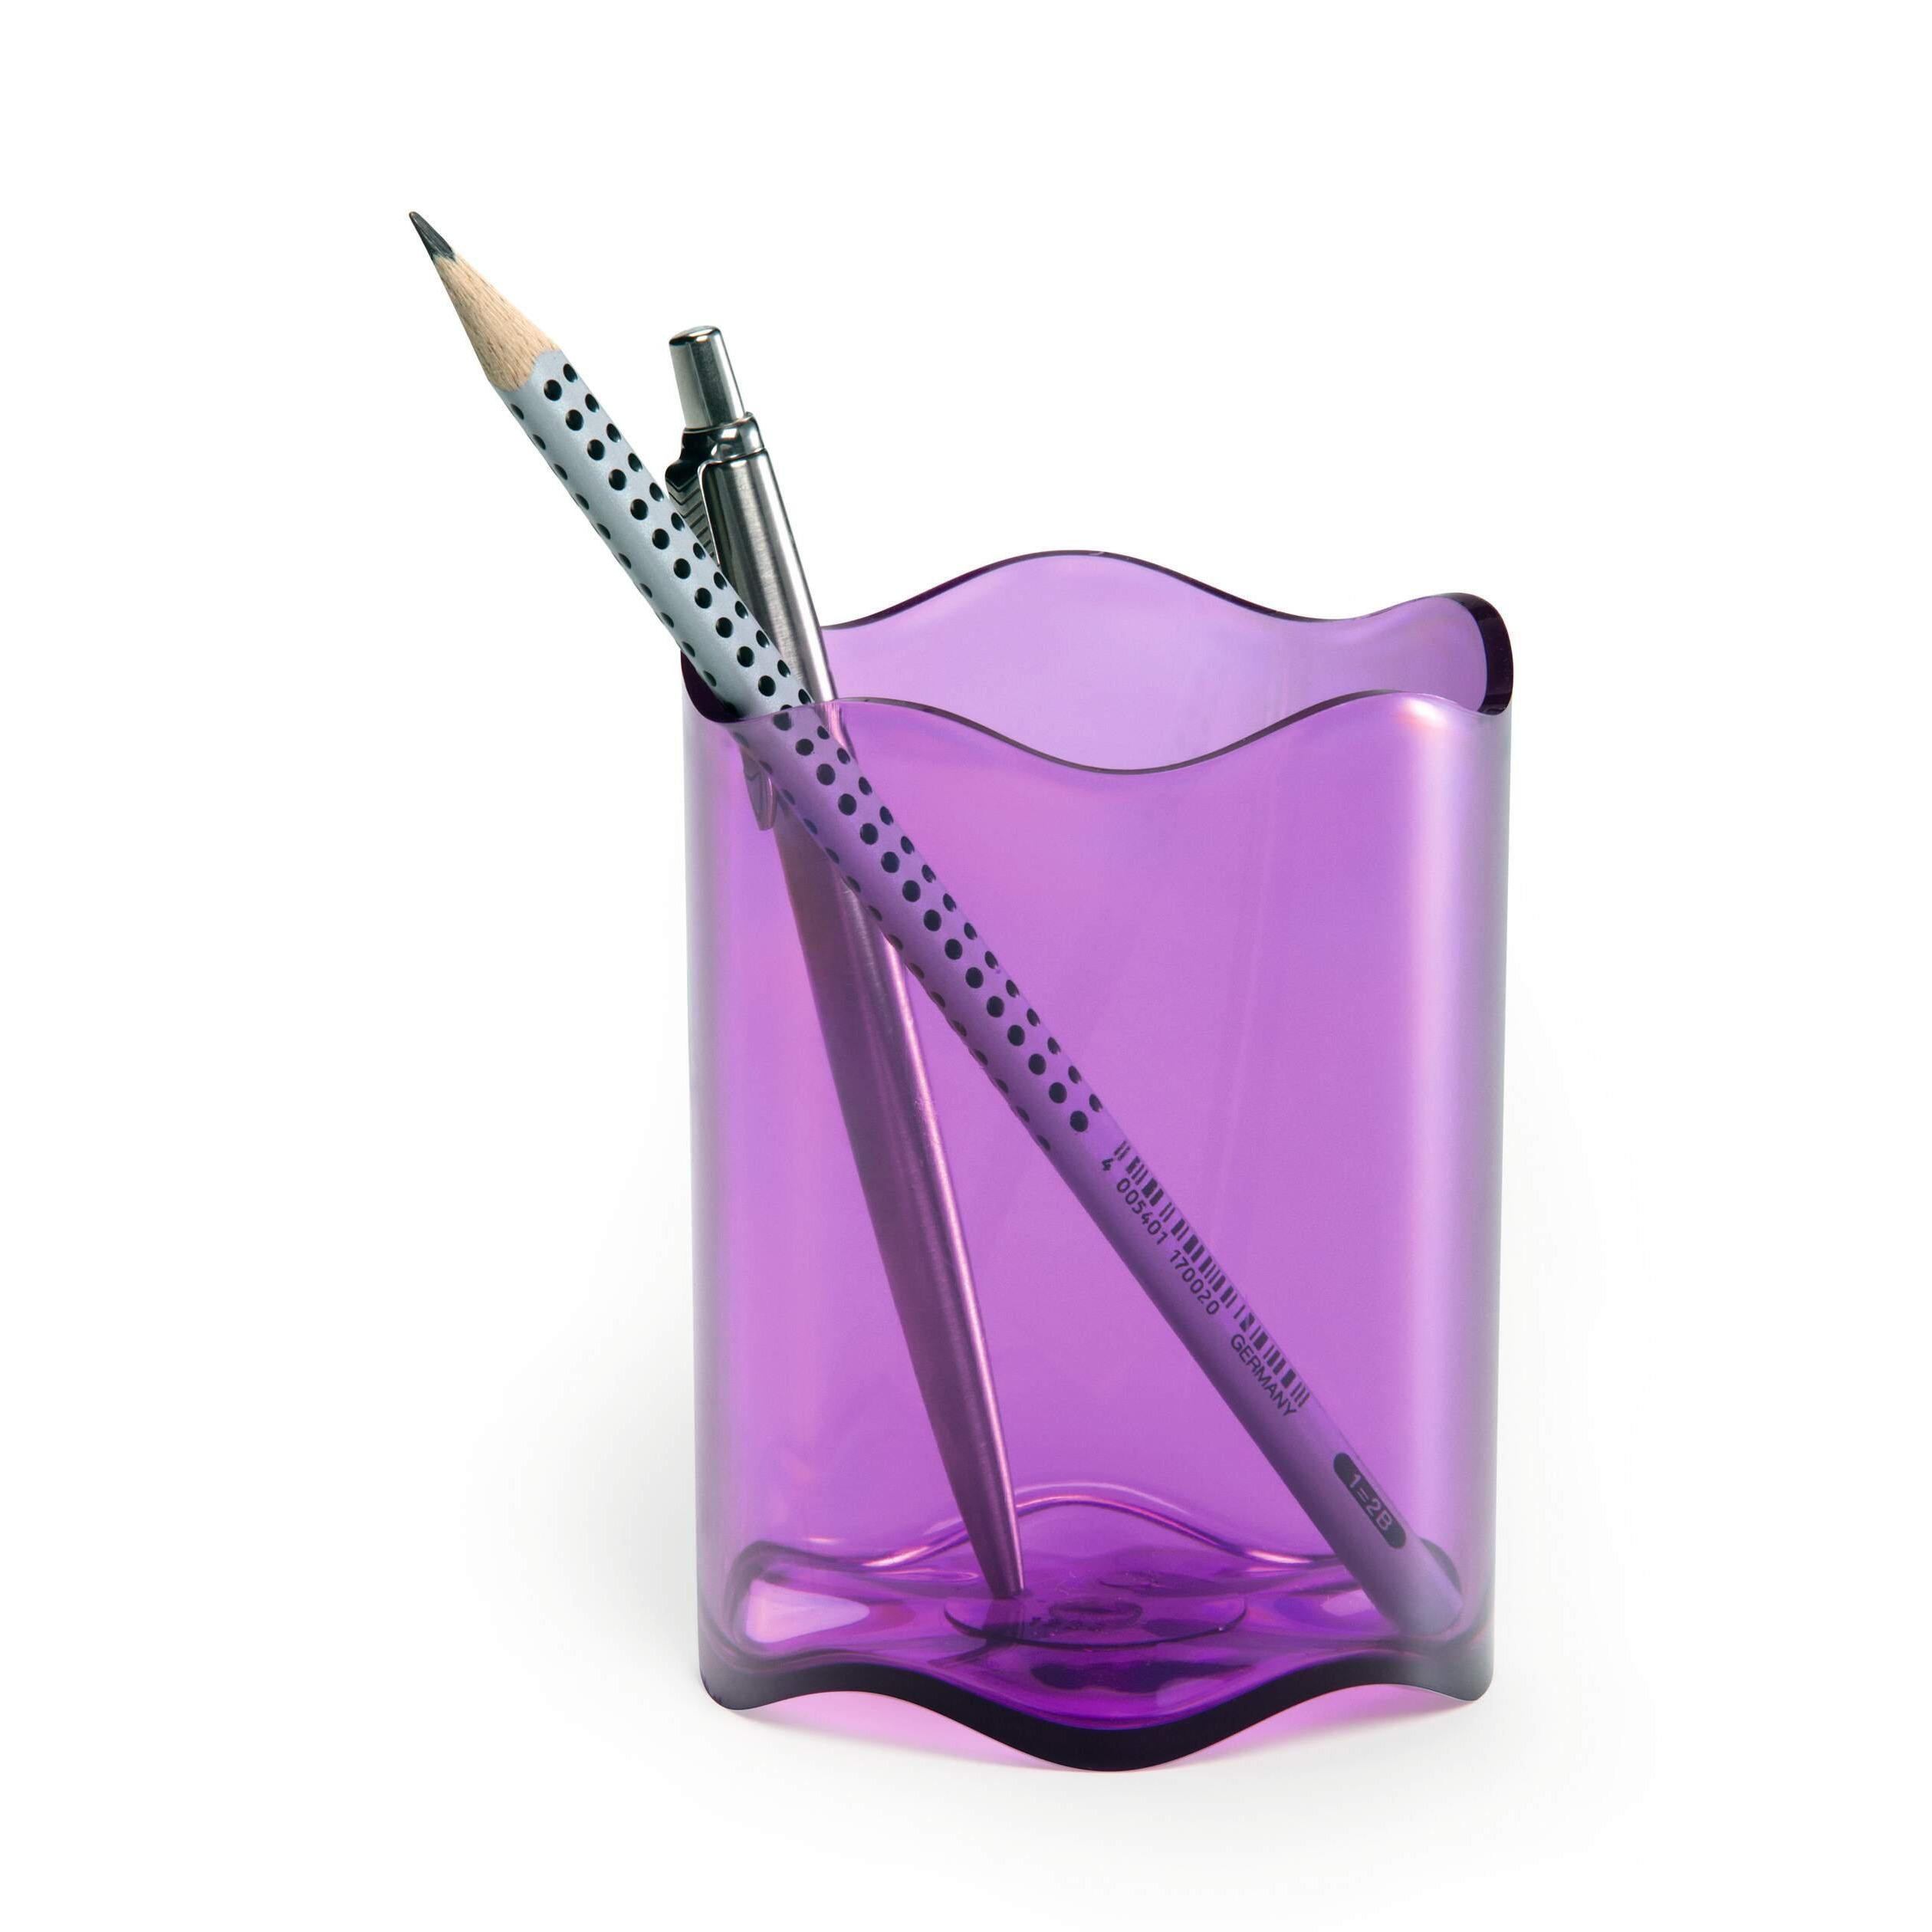 TREND Pen Pot Pencil Holder Desk Tidy Organizer Cup - Clear Purple - image 1